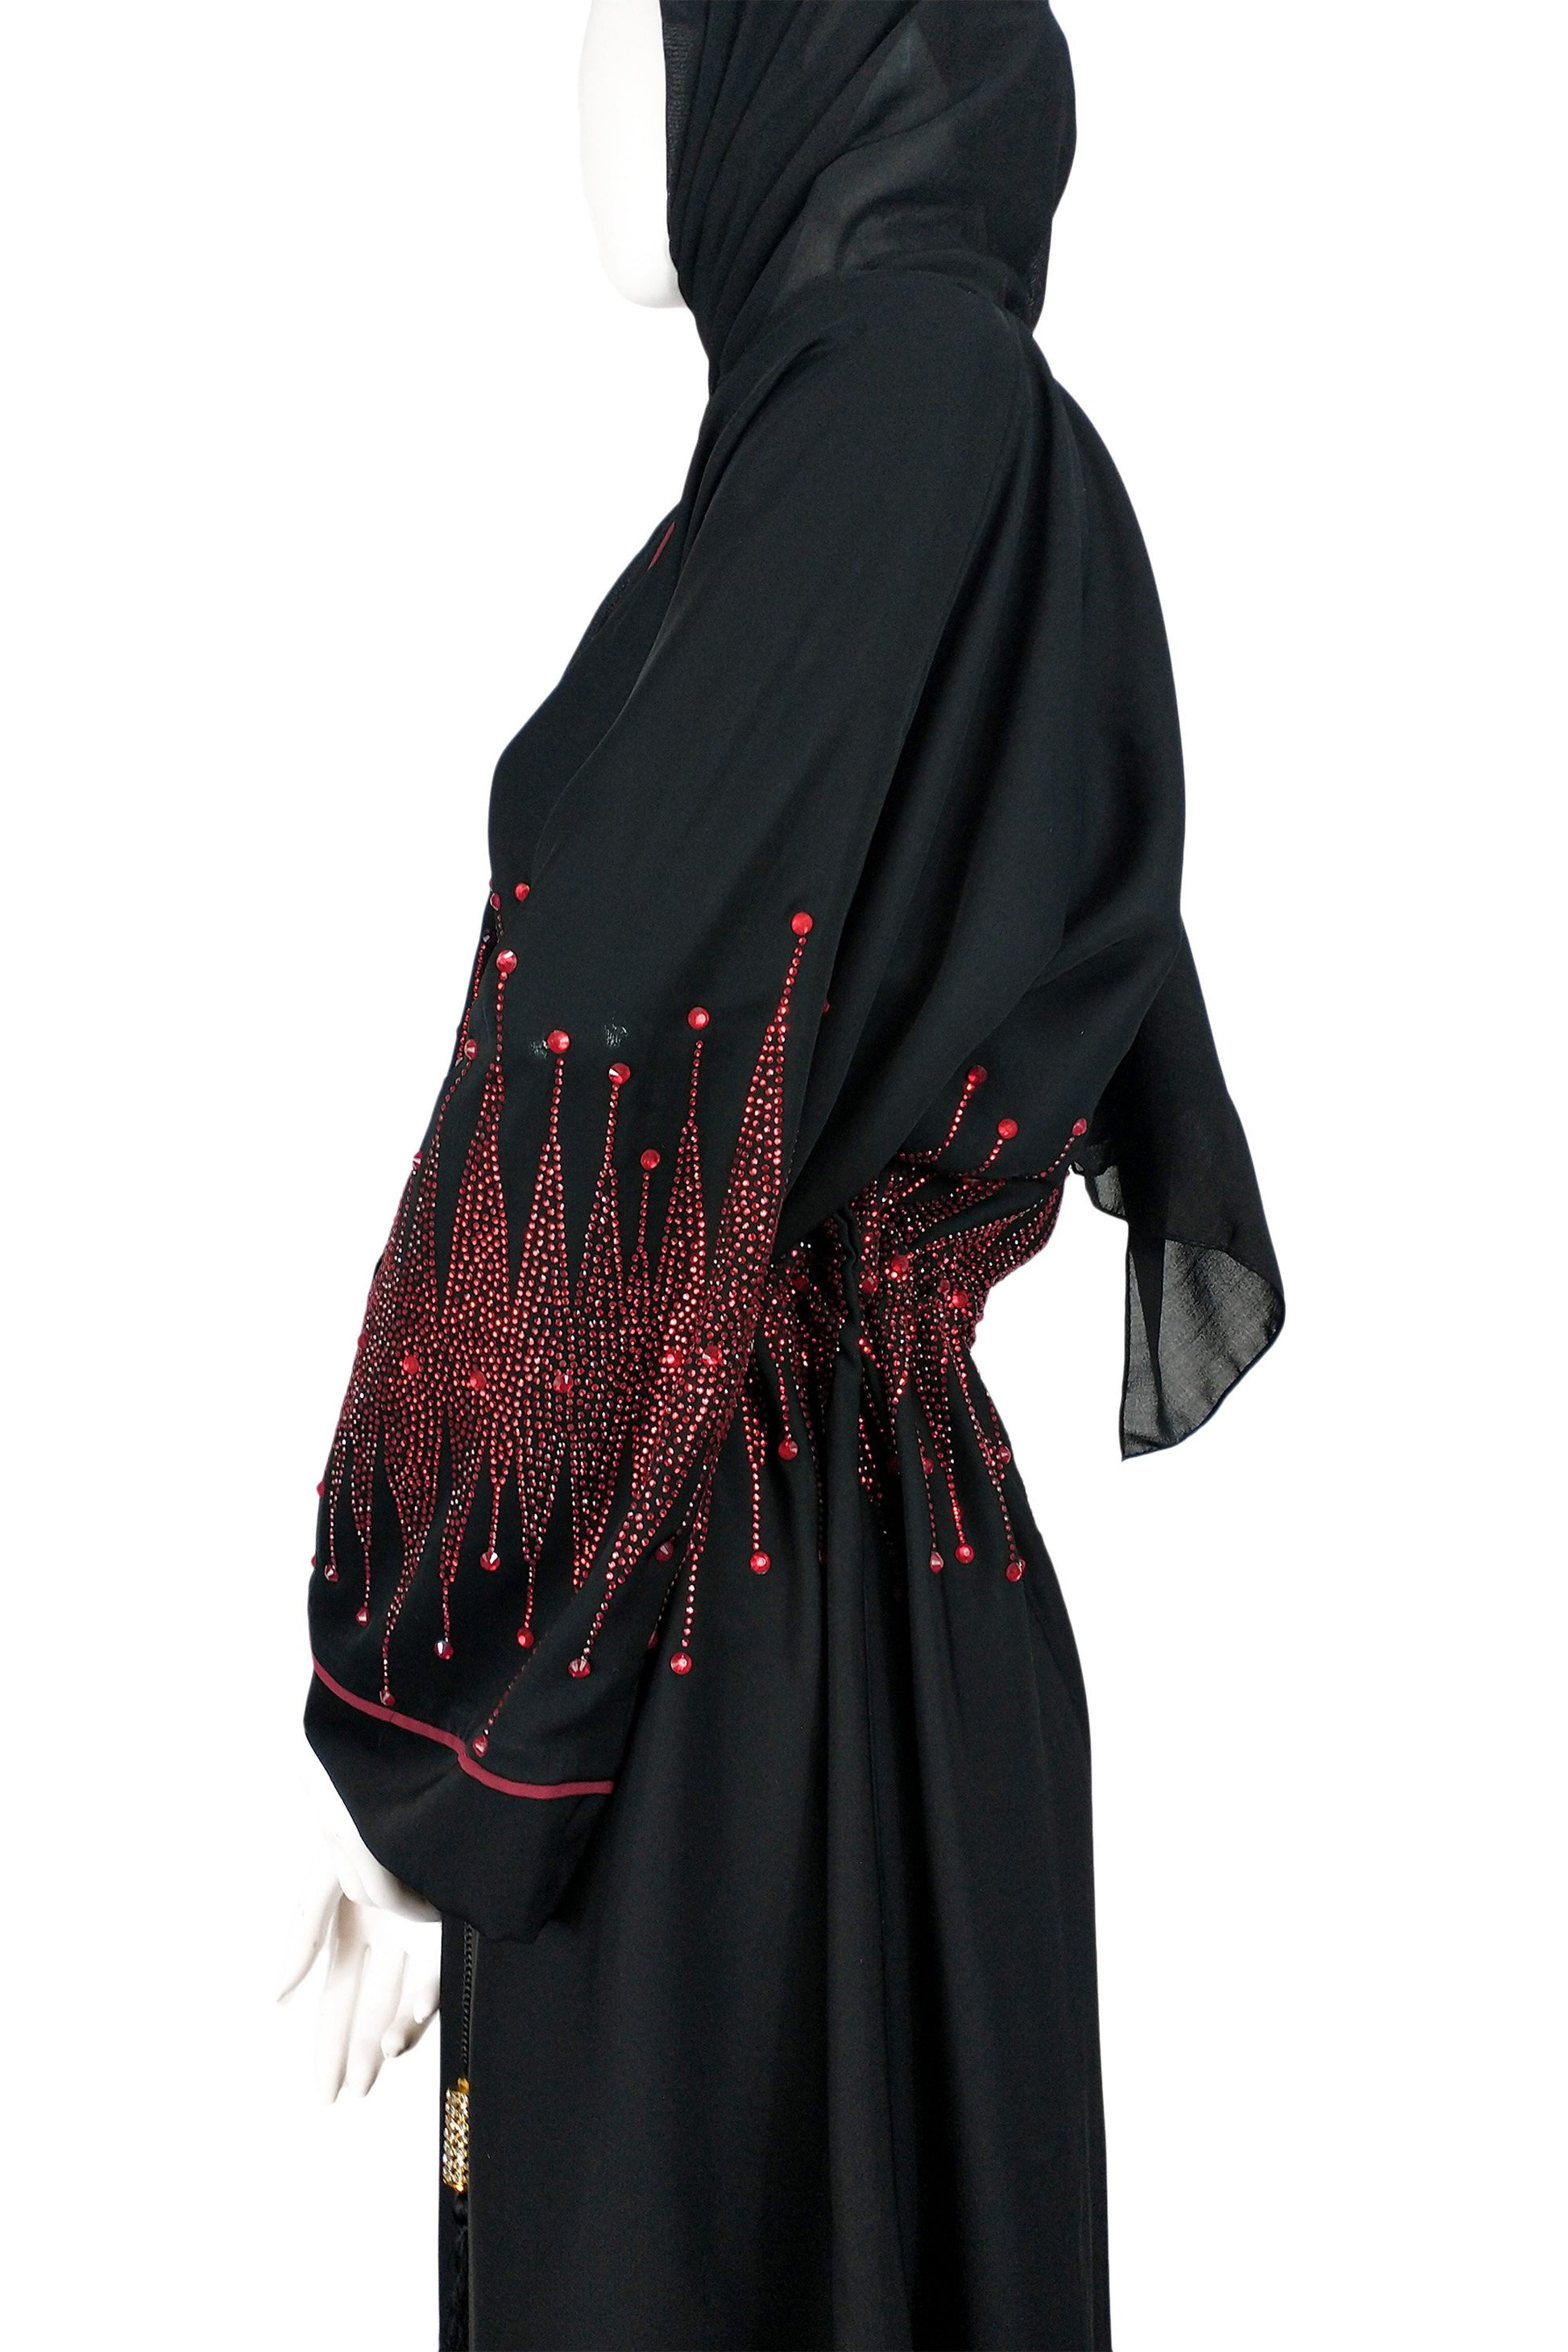 Dubai Exclusive red stone work in black abaya-almanaar Islamic Store